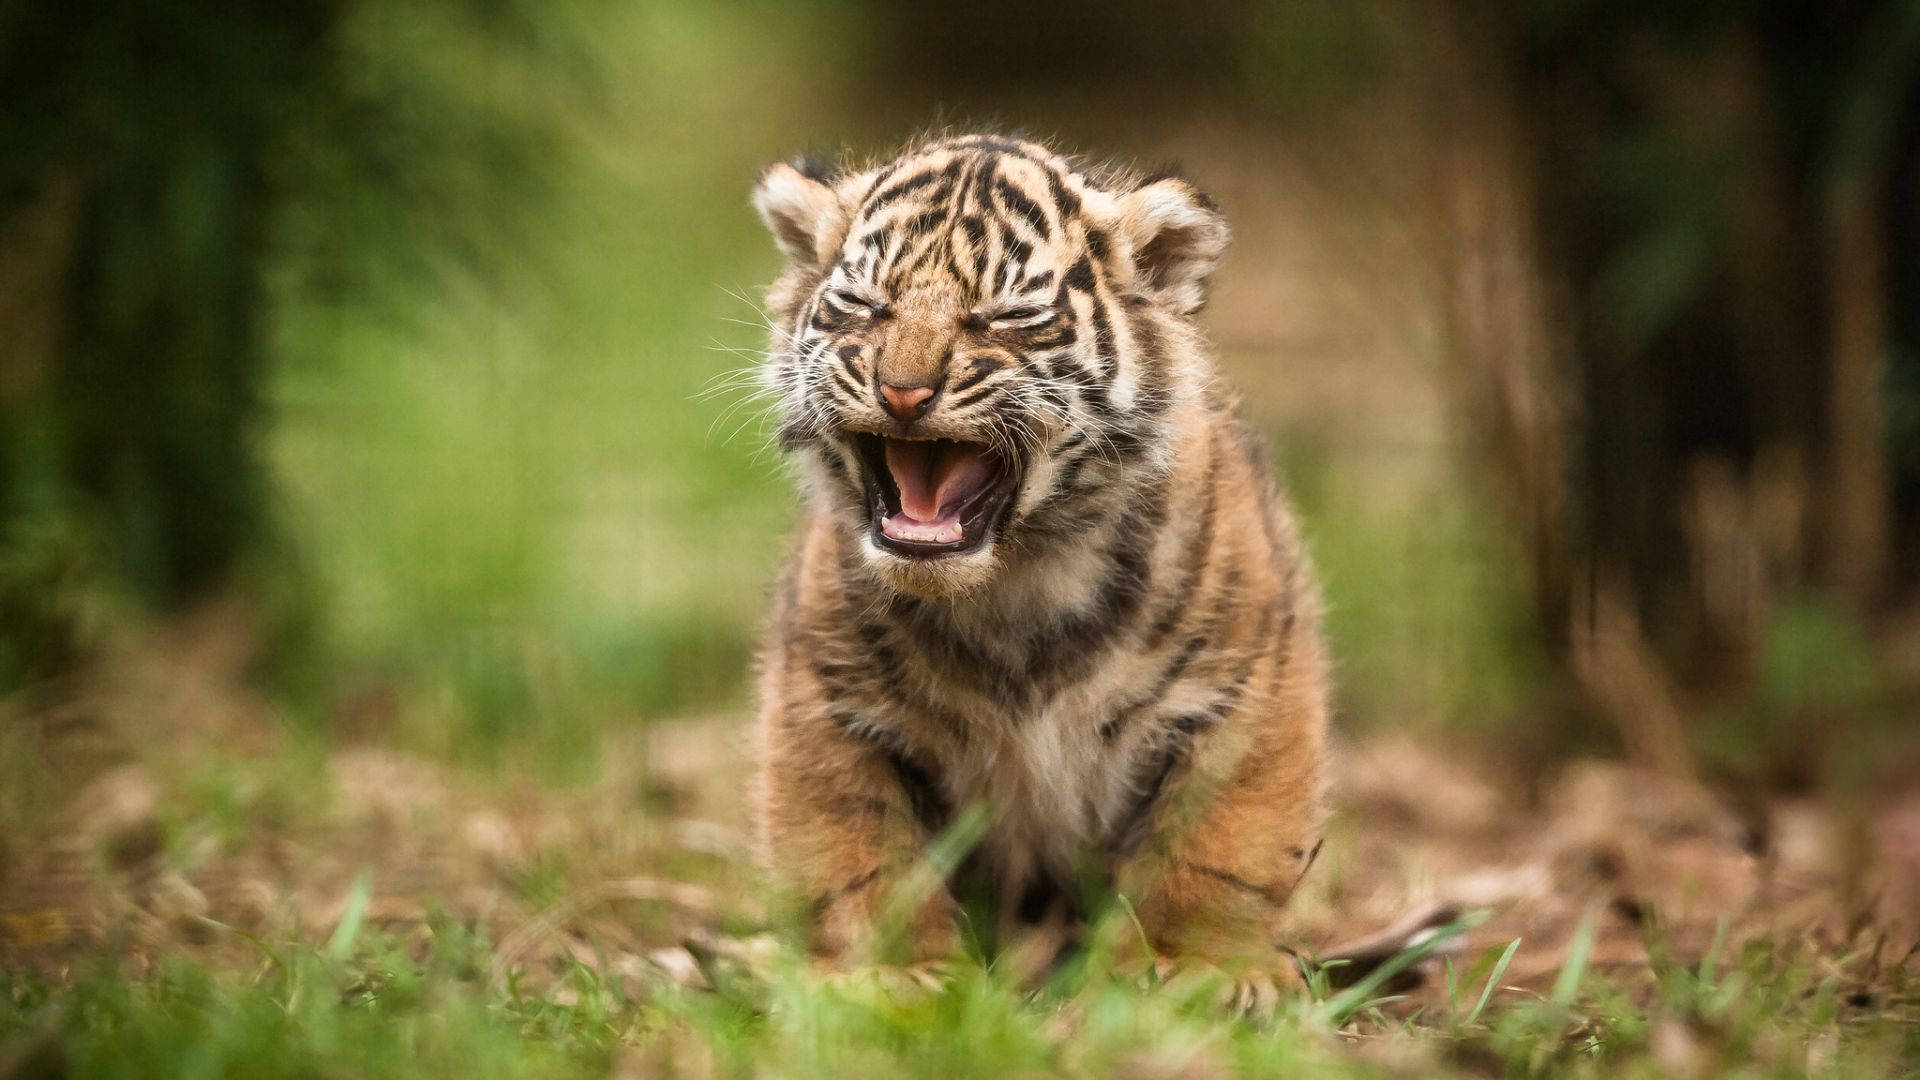 Baby Tiger Cute Growl